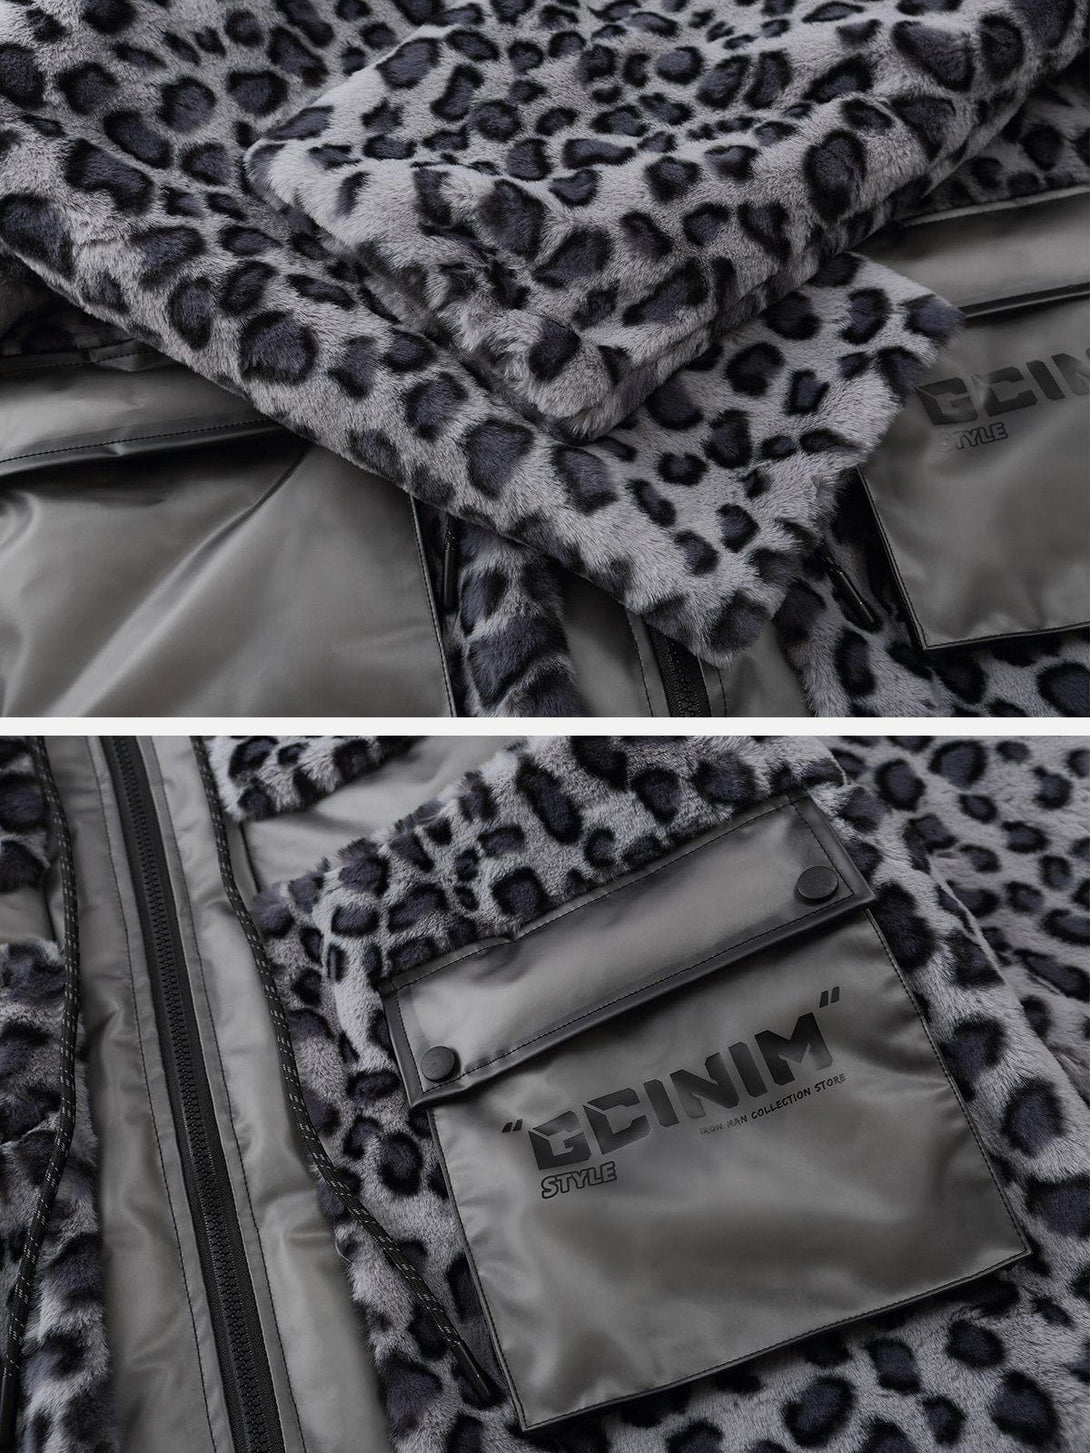 AlanBalen® - Leopard Plush Stitching Transparent PU Winter Coat AlanBalen